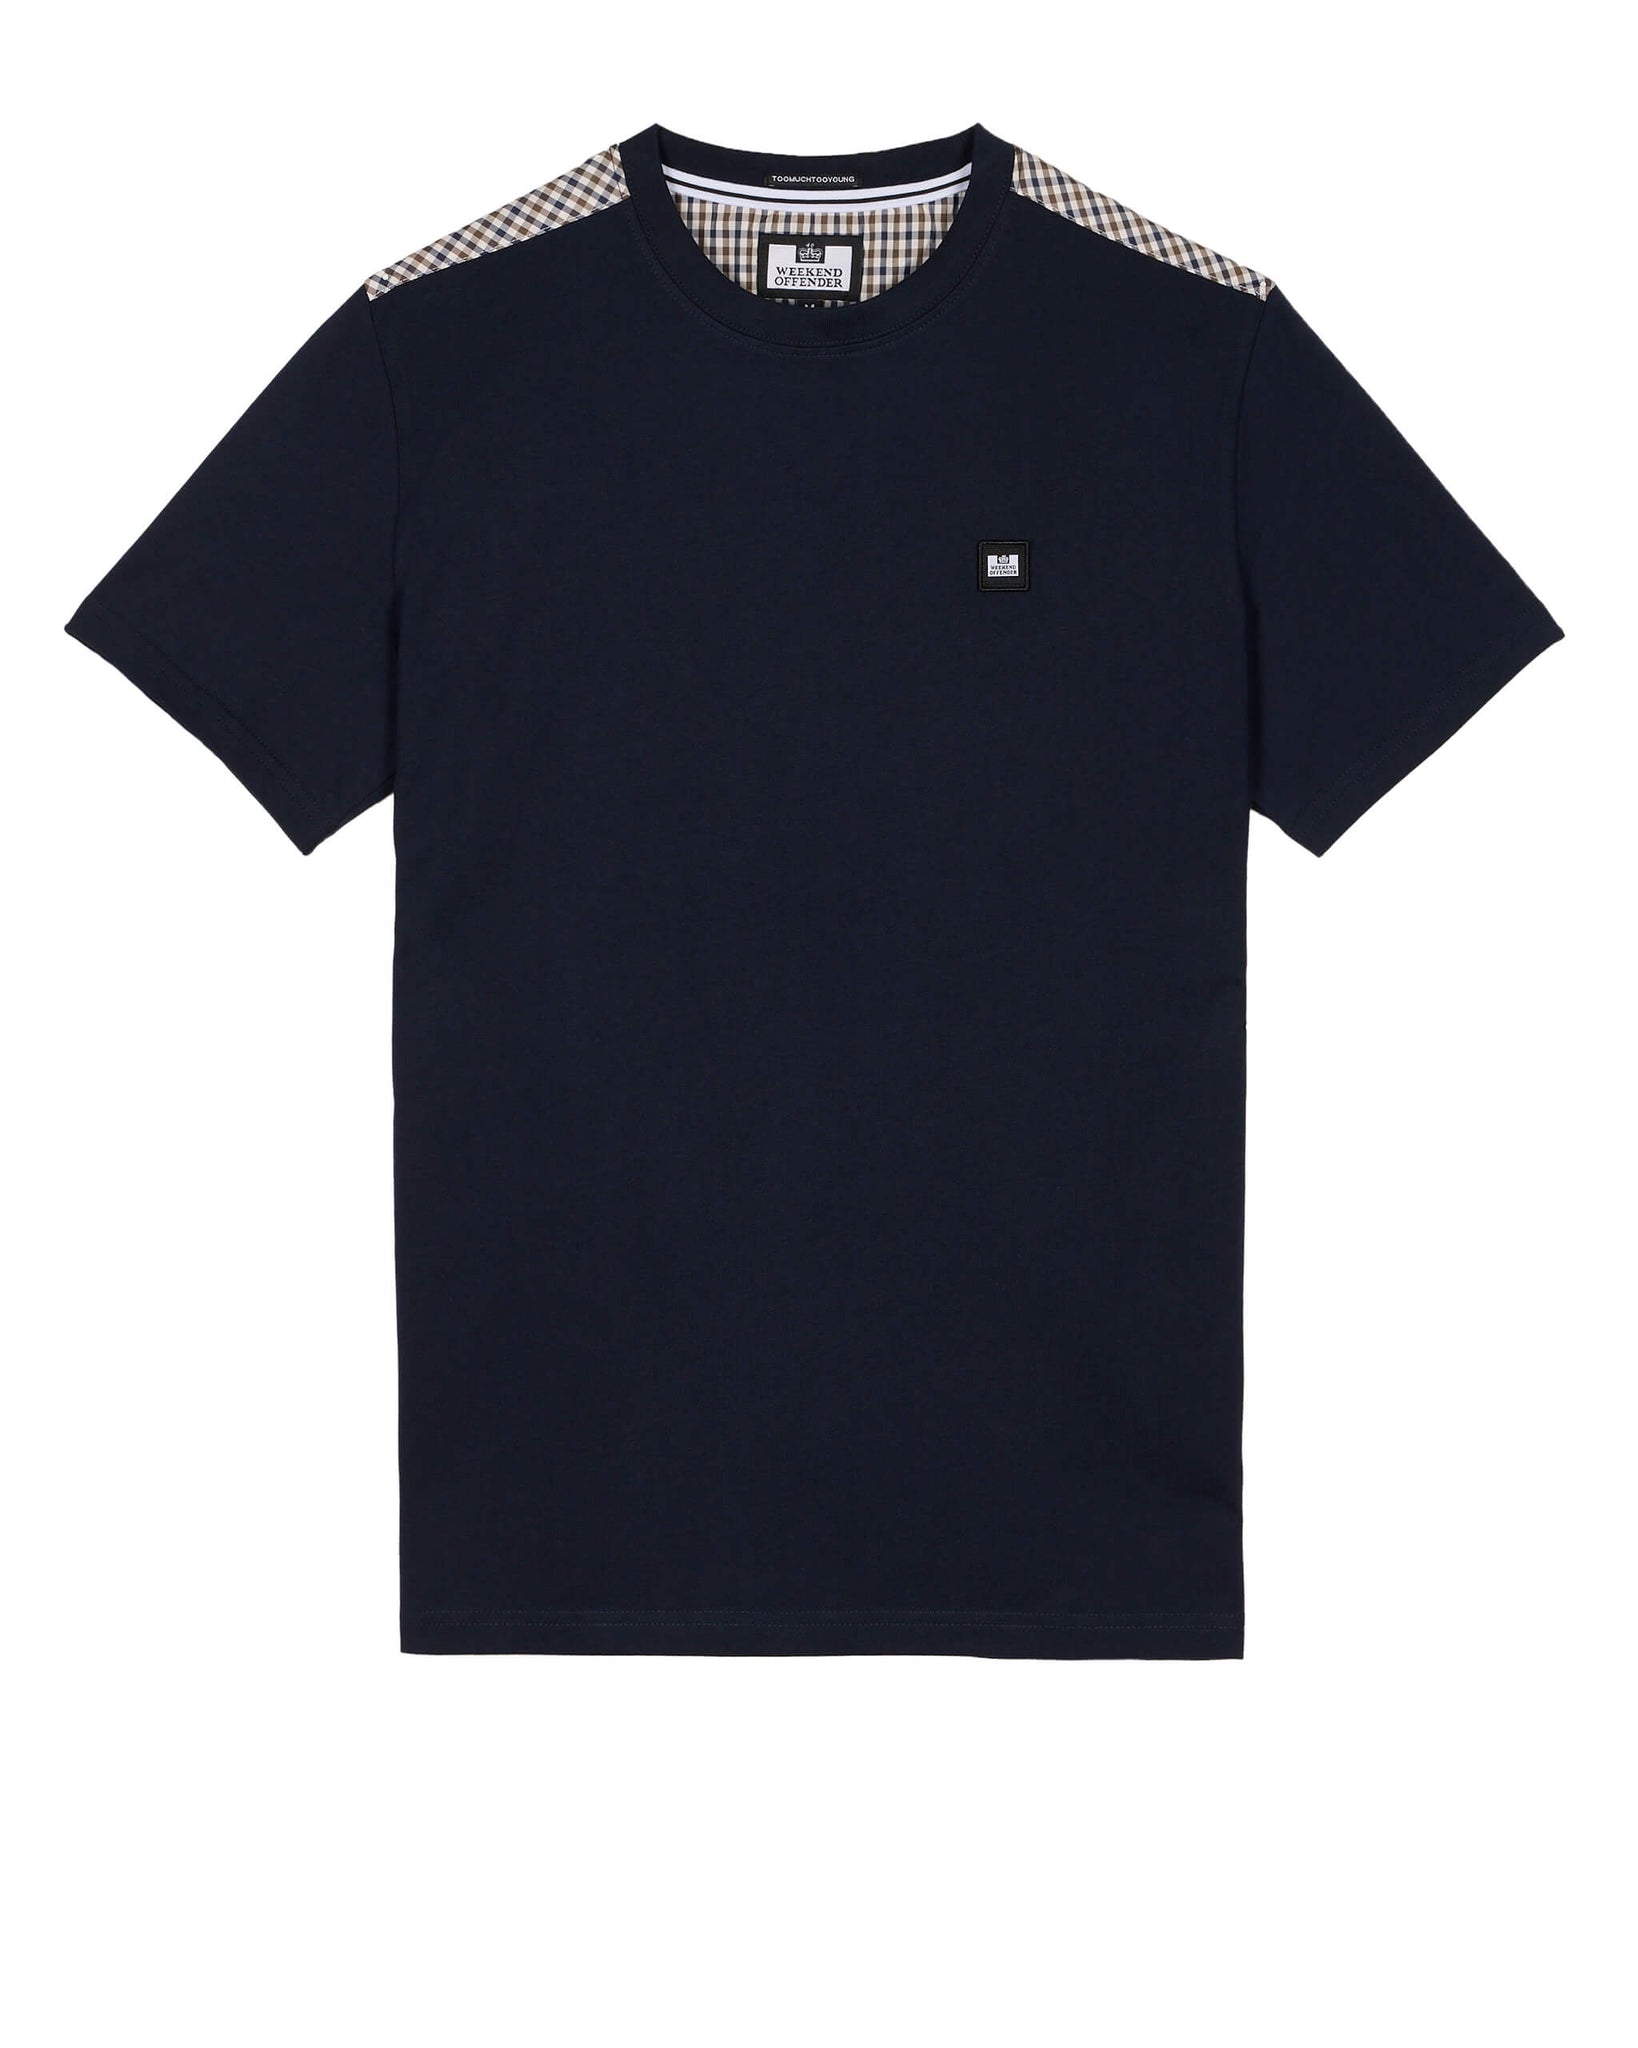 Diaz T-Shirt Navy - Plus Size